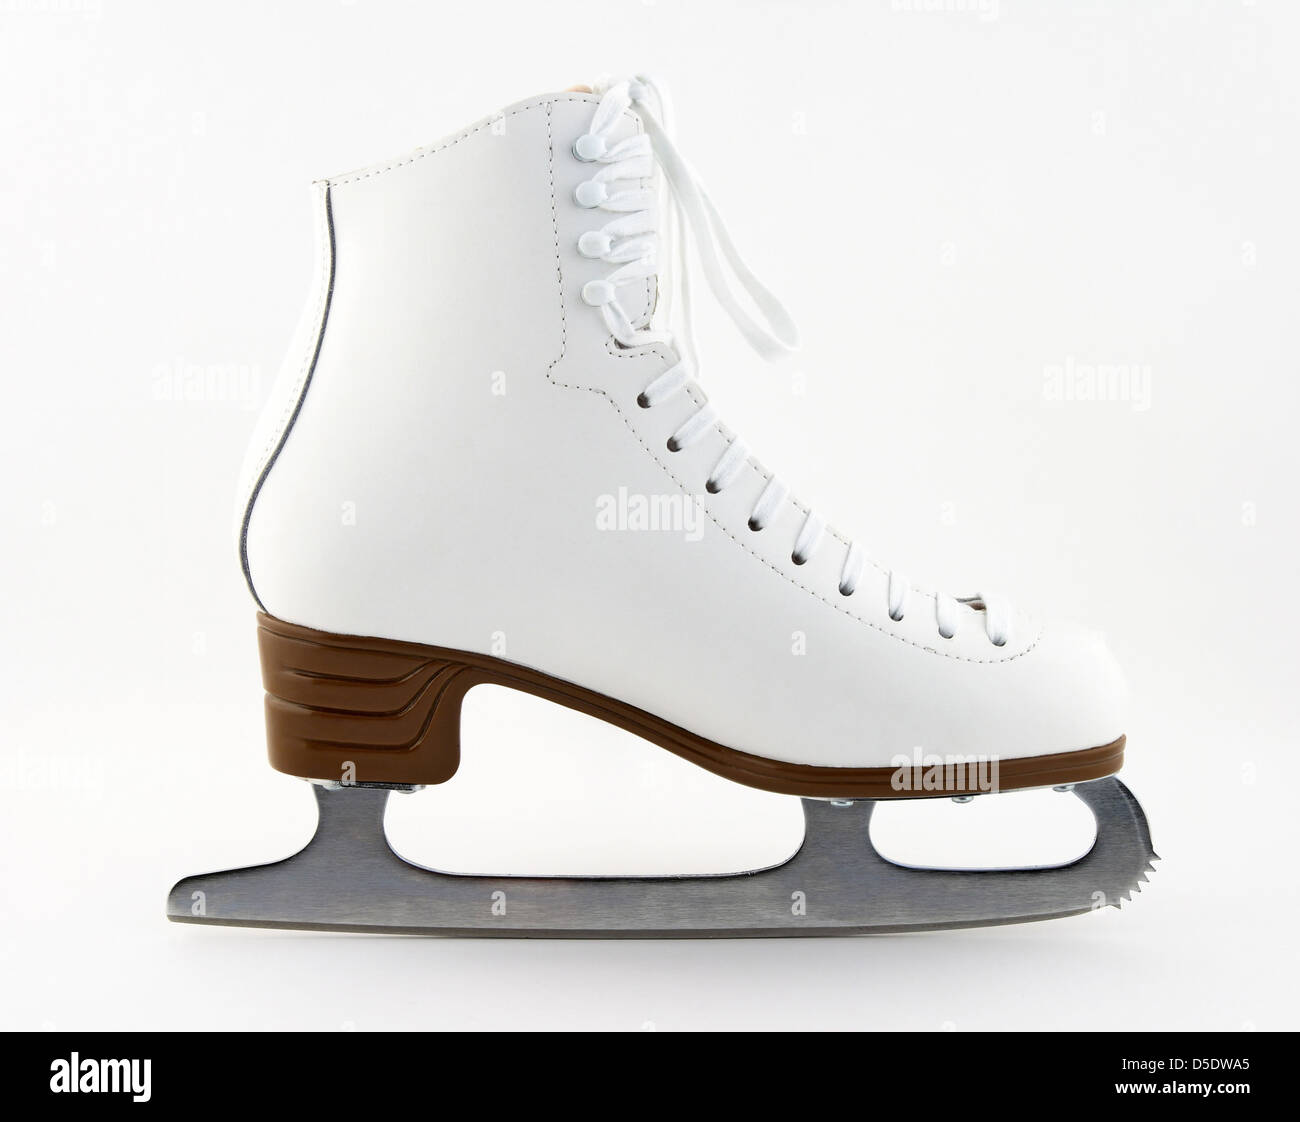 Elegant white figure skate for training and leisure. Stock Photo